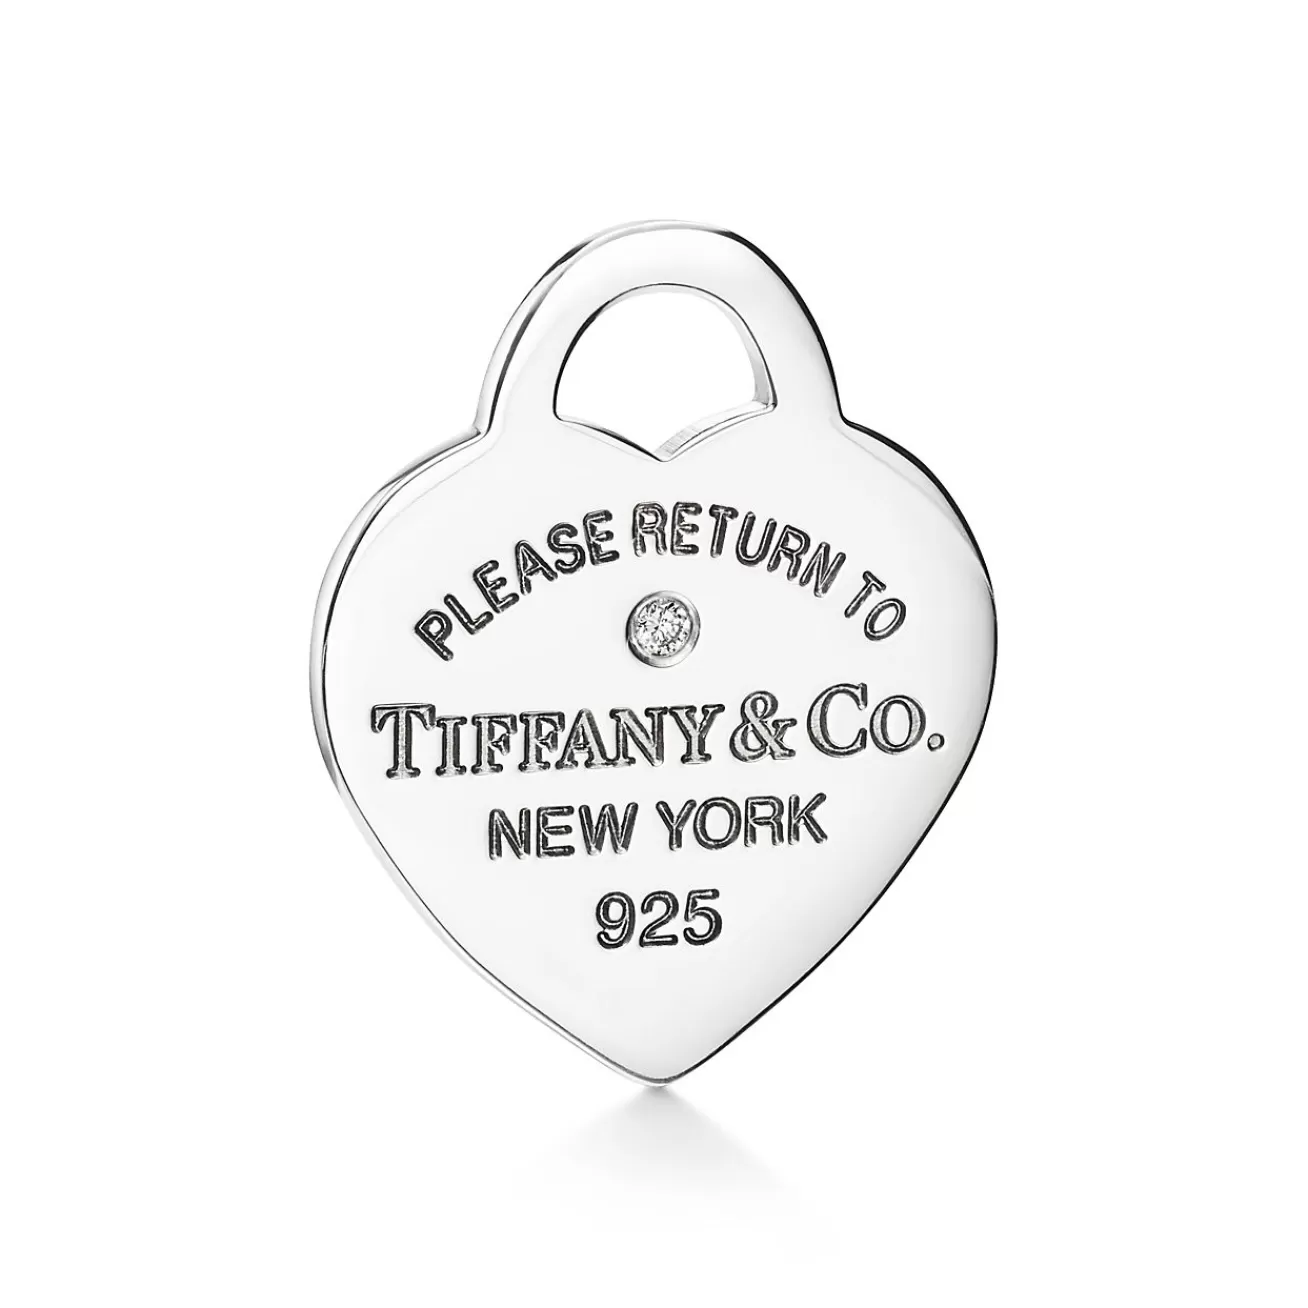 Tiffany & Co. Return to Tiffany® Pink Mini Heart Bead Bracelet in Silver with a Diamond, 4 mm | ^ Bracelets | Sterling Silver Jewelry